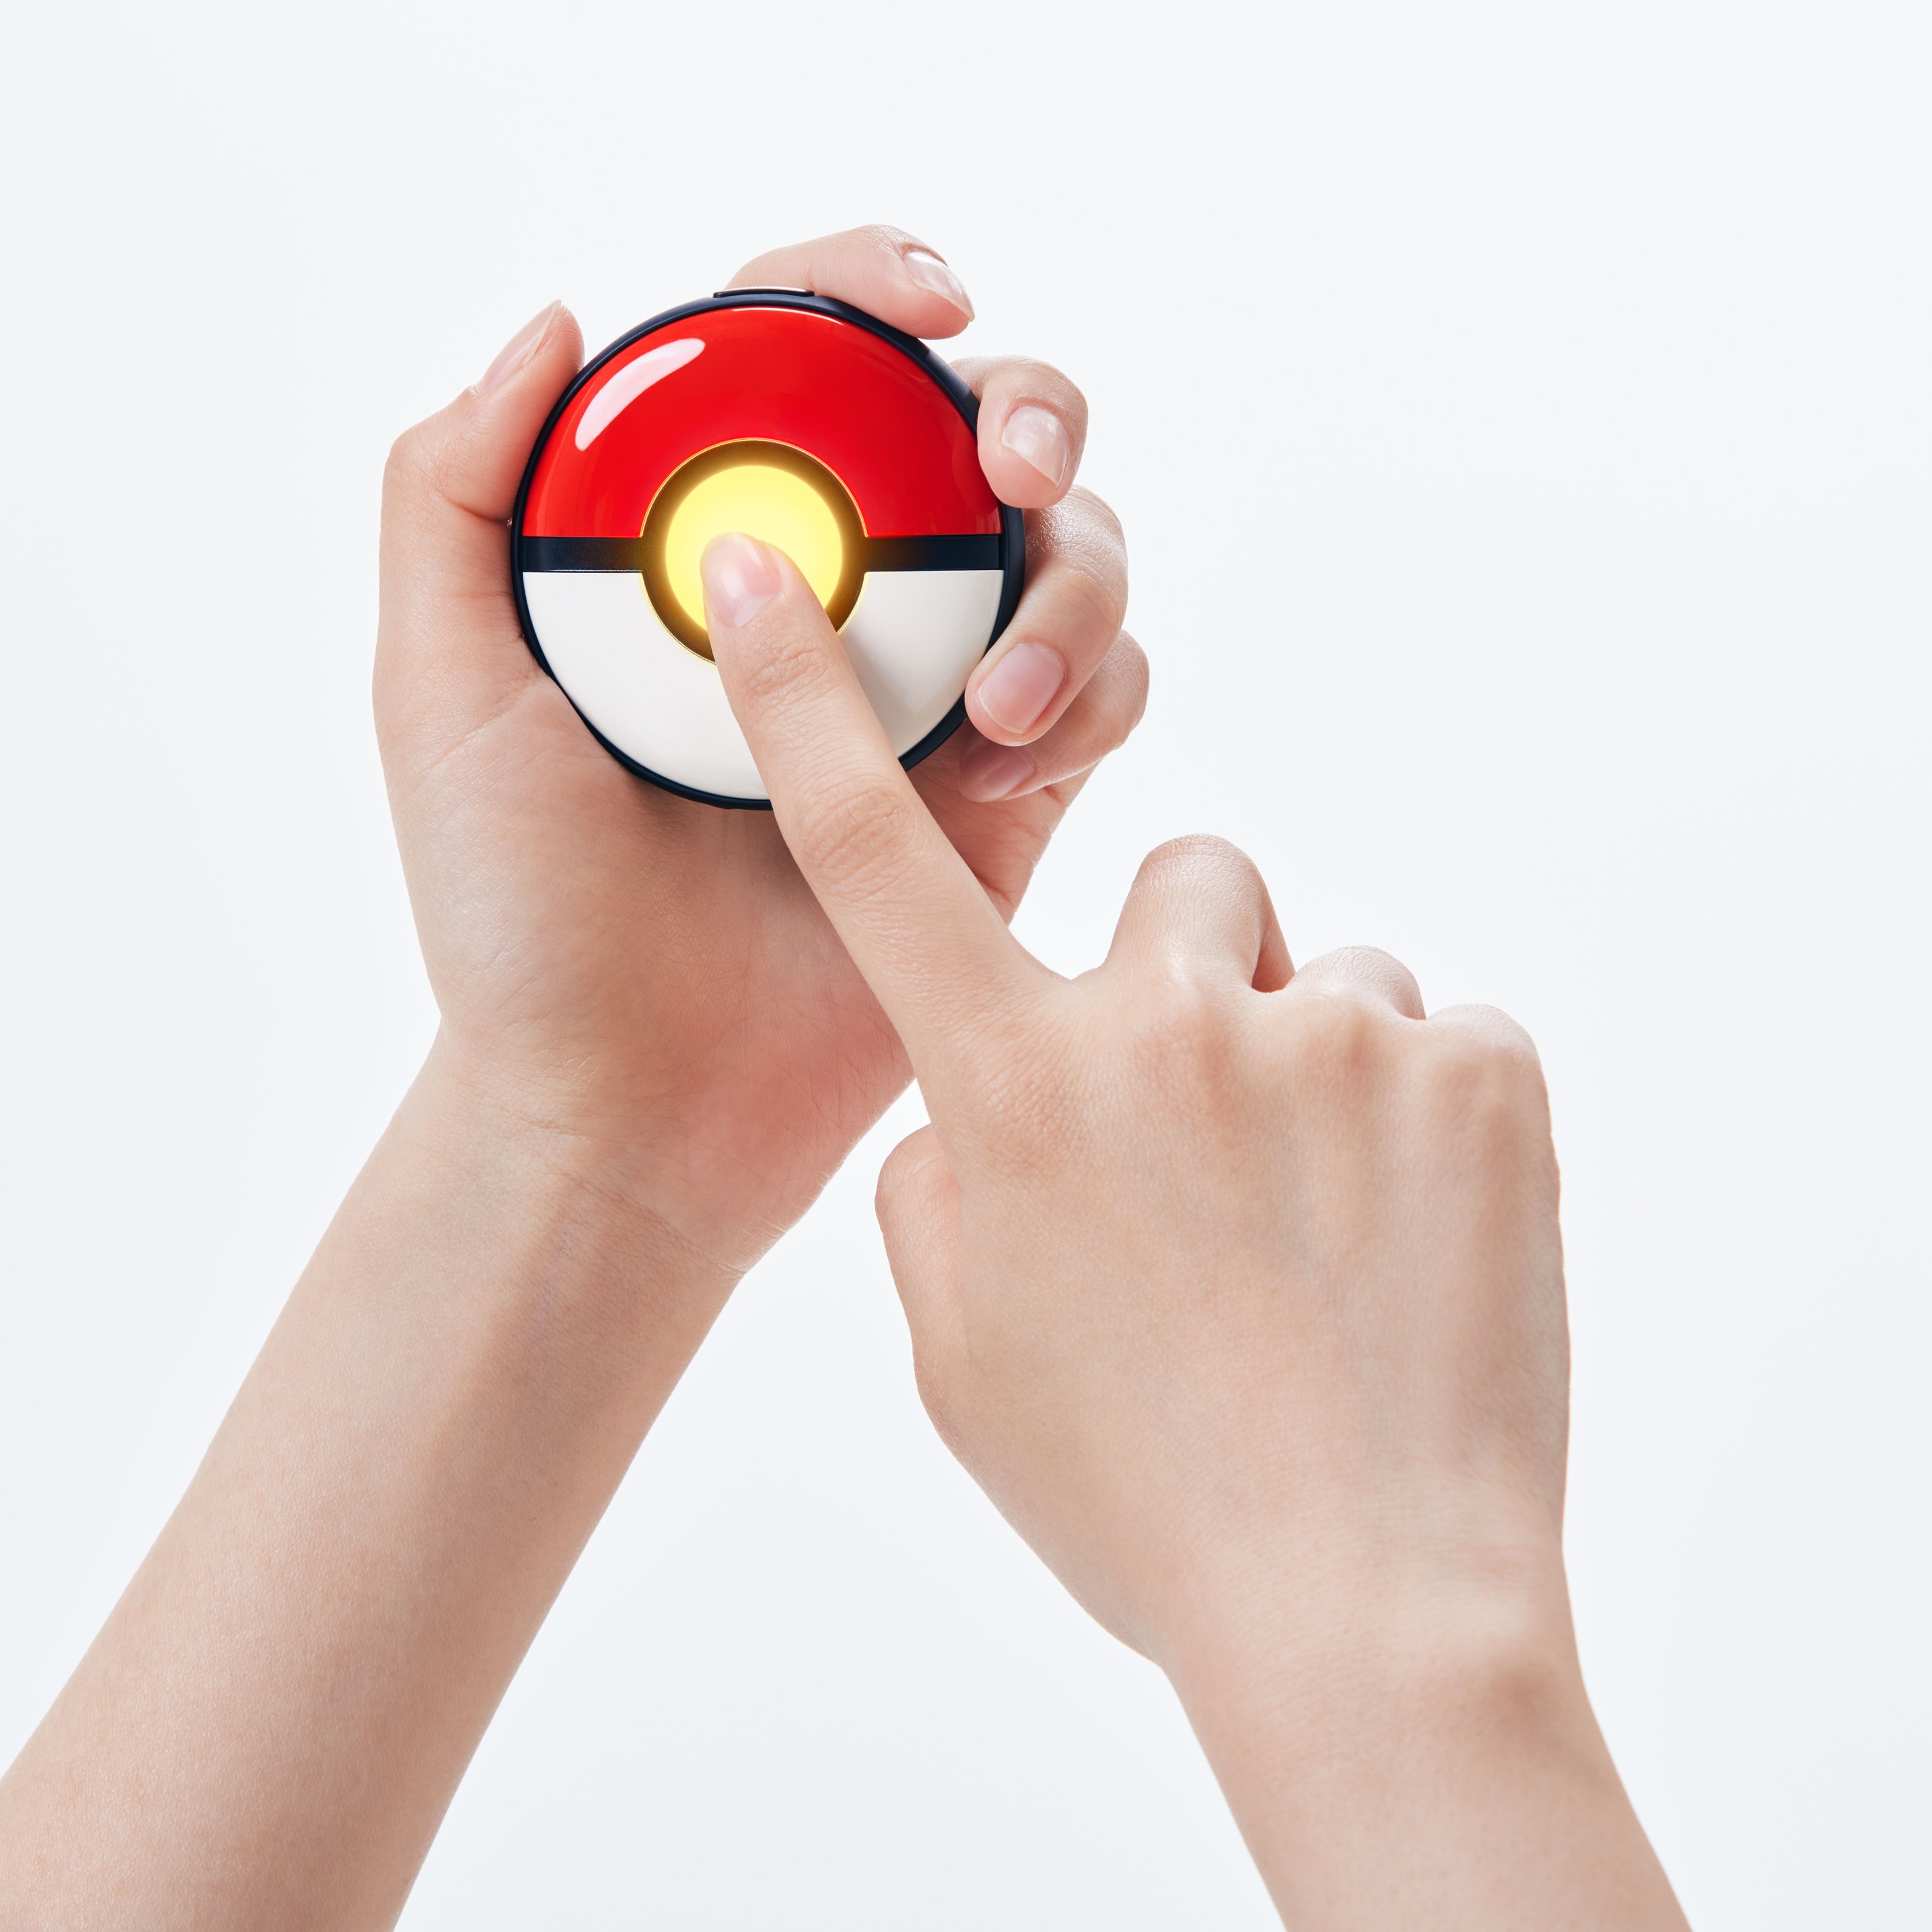 Pokémon Go Plus: Price, Features, Everything We Know